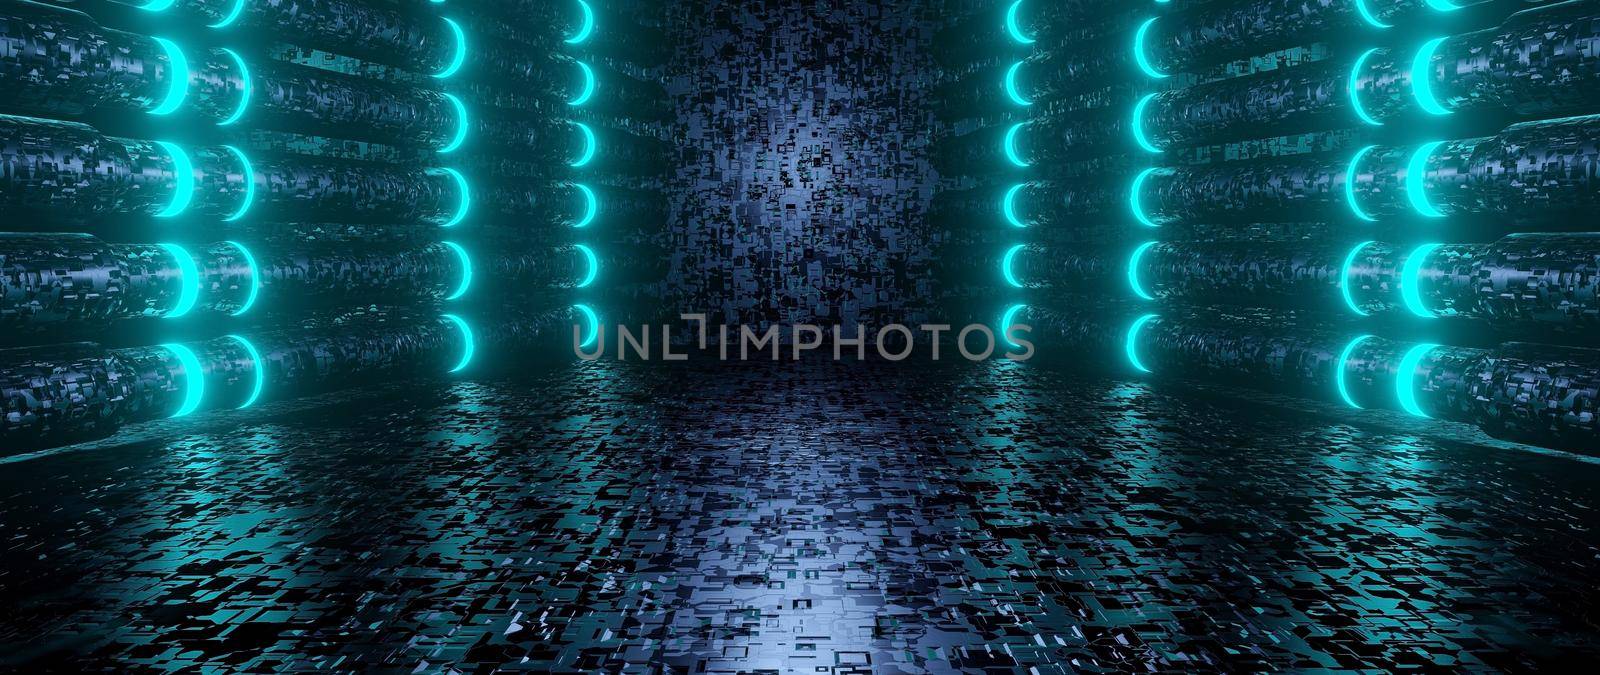 Empty Grunge Basement Underground Hall Light Blue Banner Background Futuristic Concept For Product Backgrounds Presentation 3D Rendering